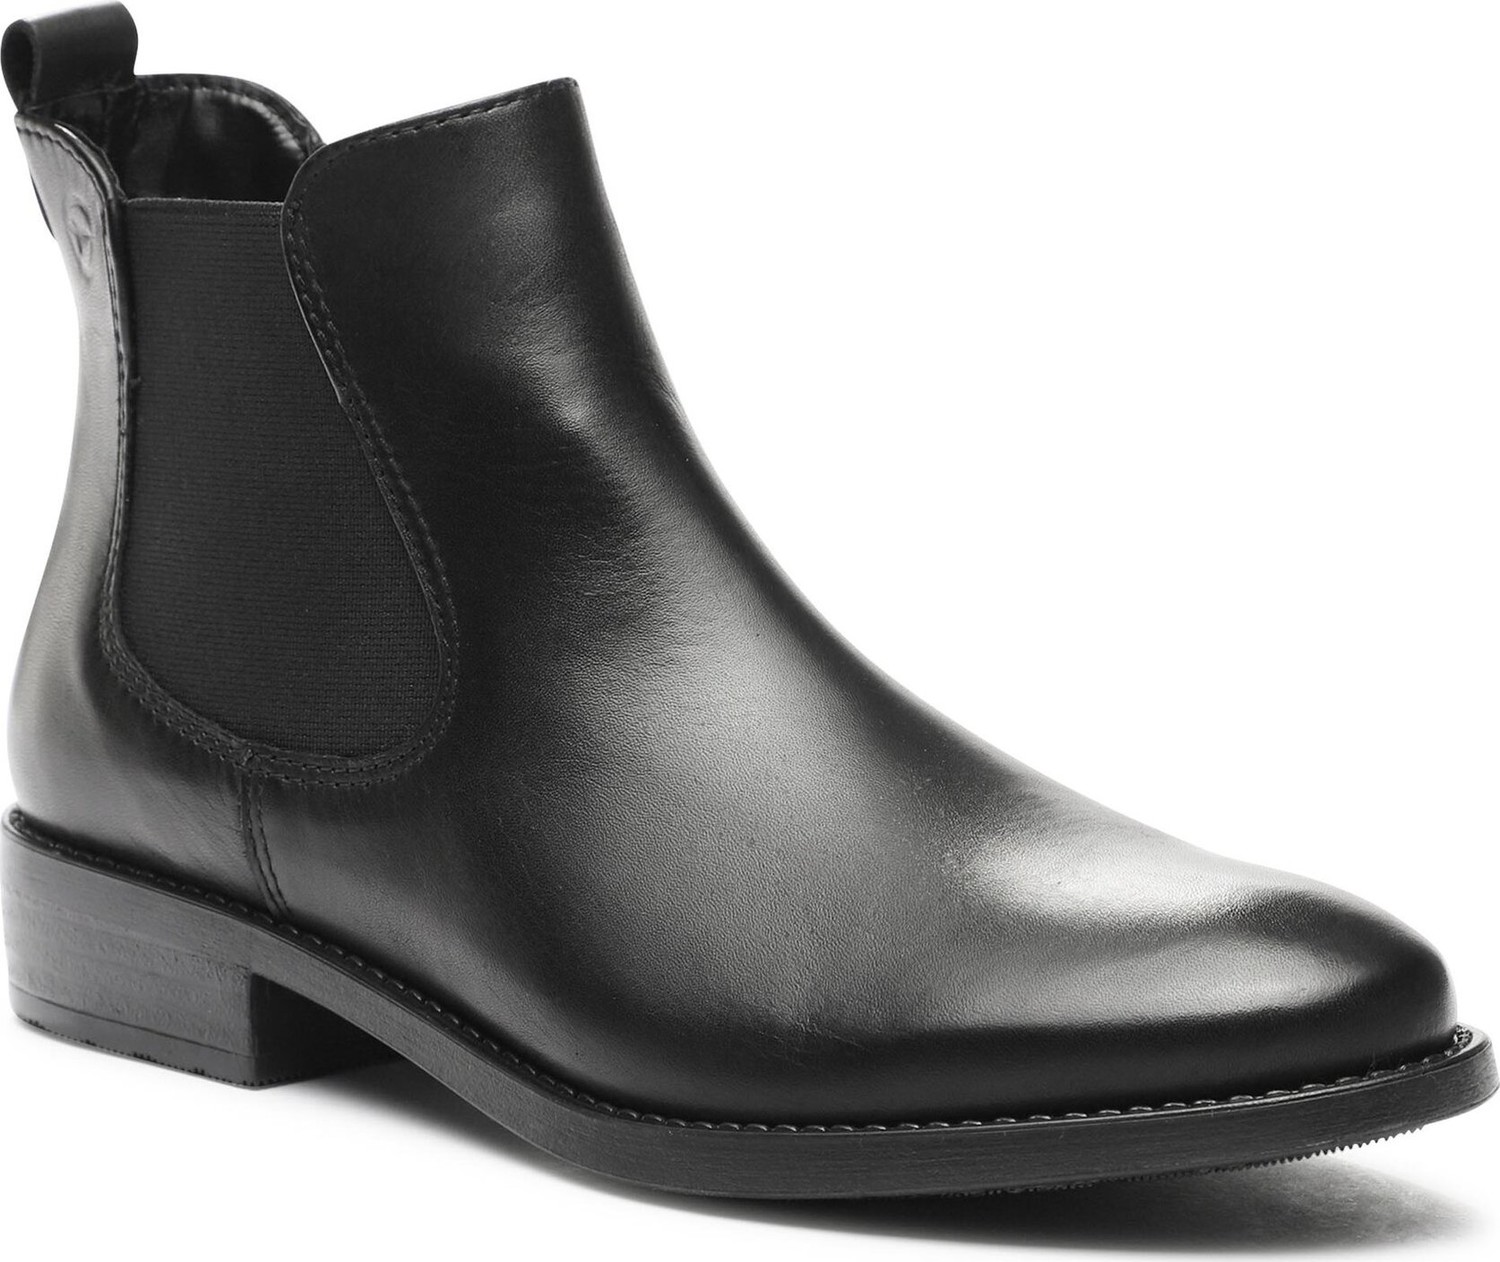 Kotníková obuv s elastickým prvkem Tamaris 1-25463-41 Black Leather 003